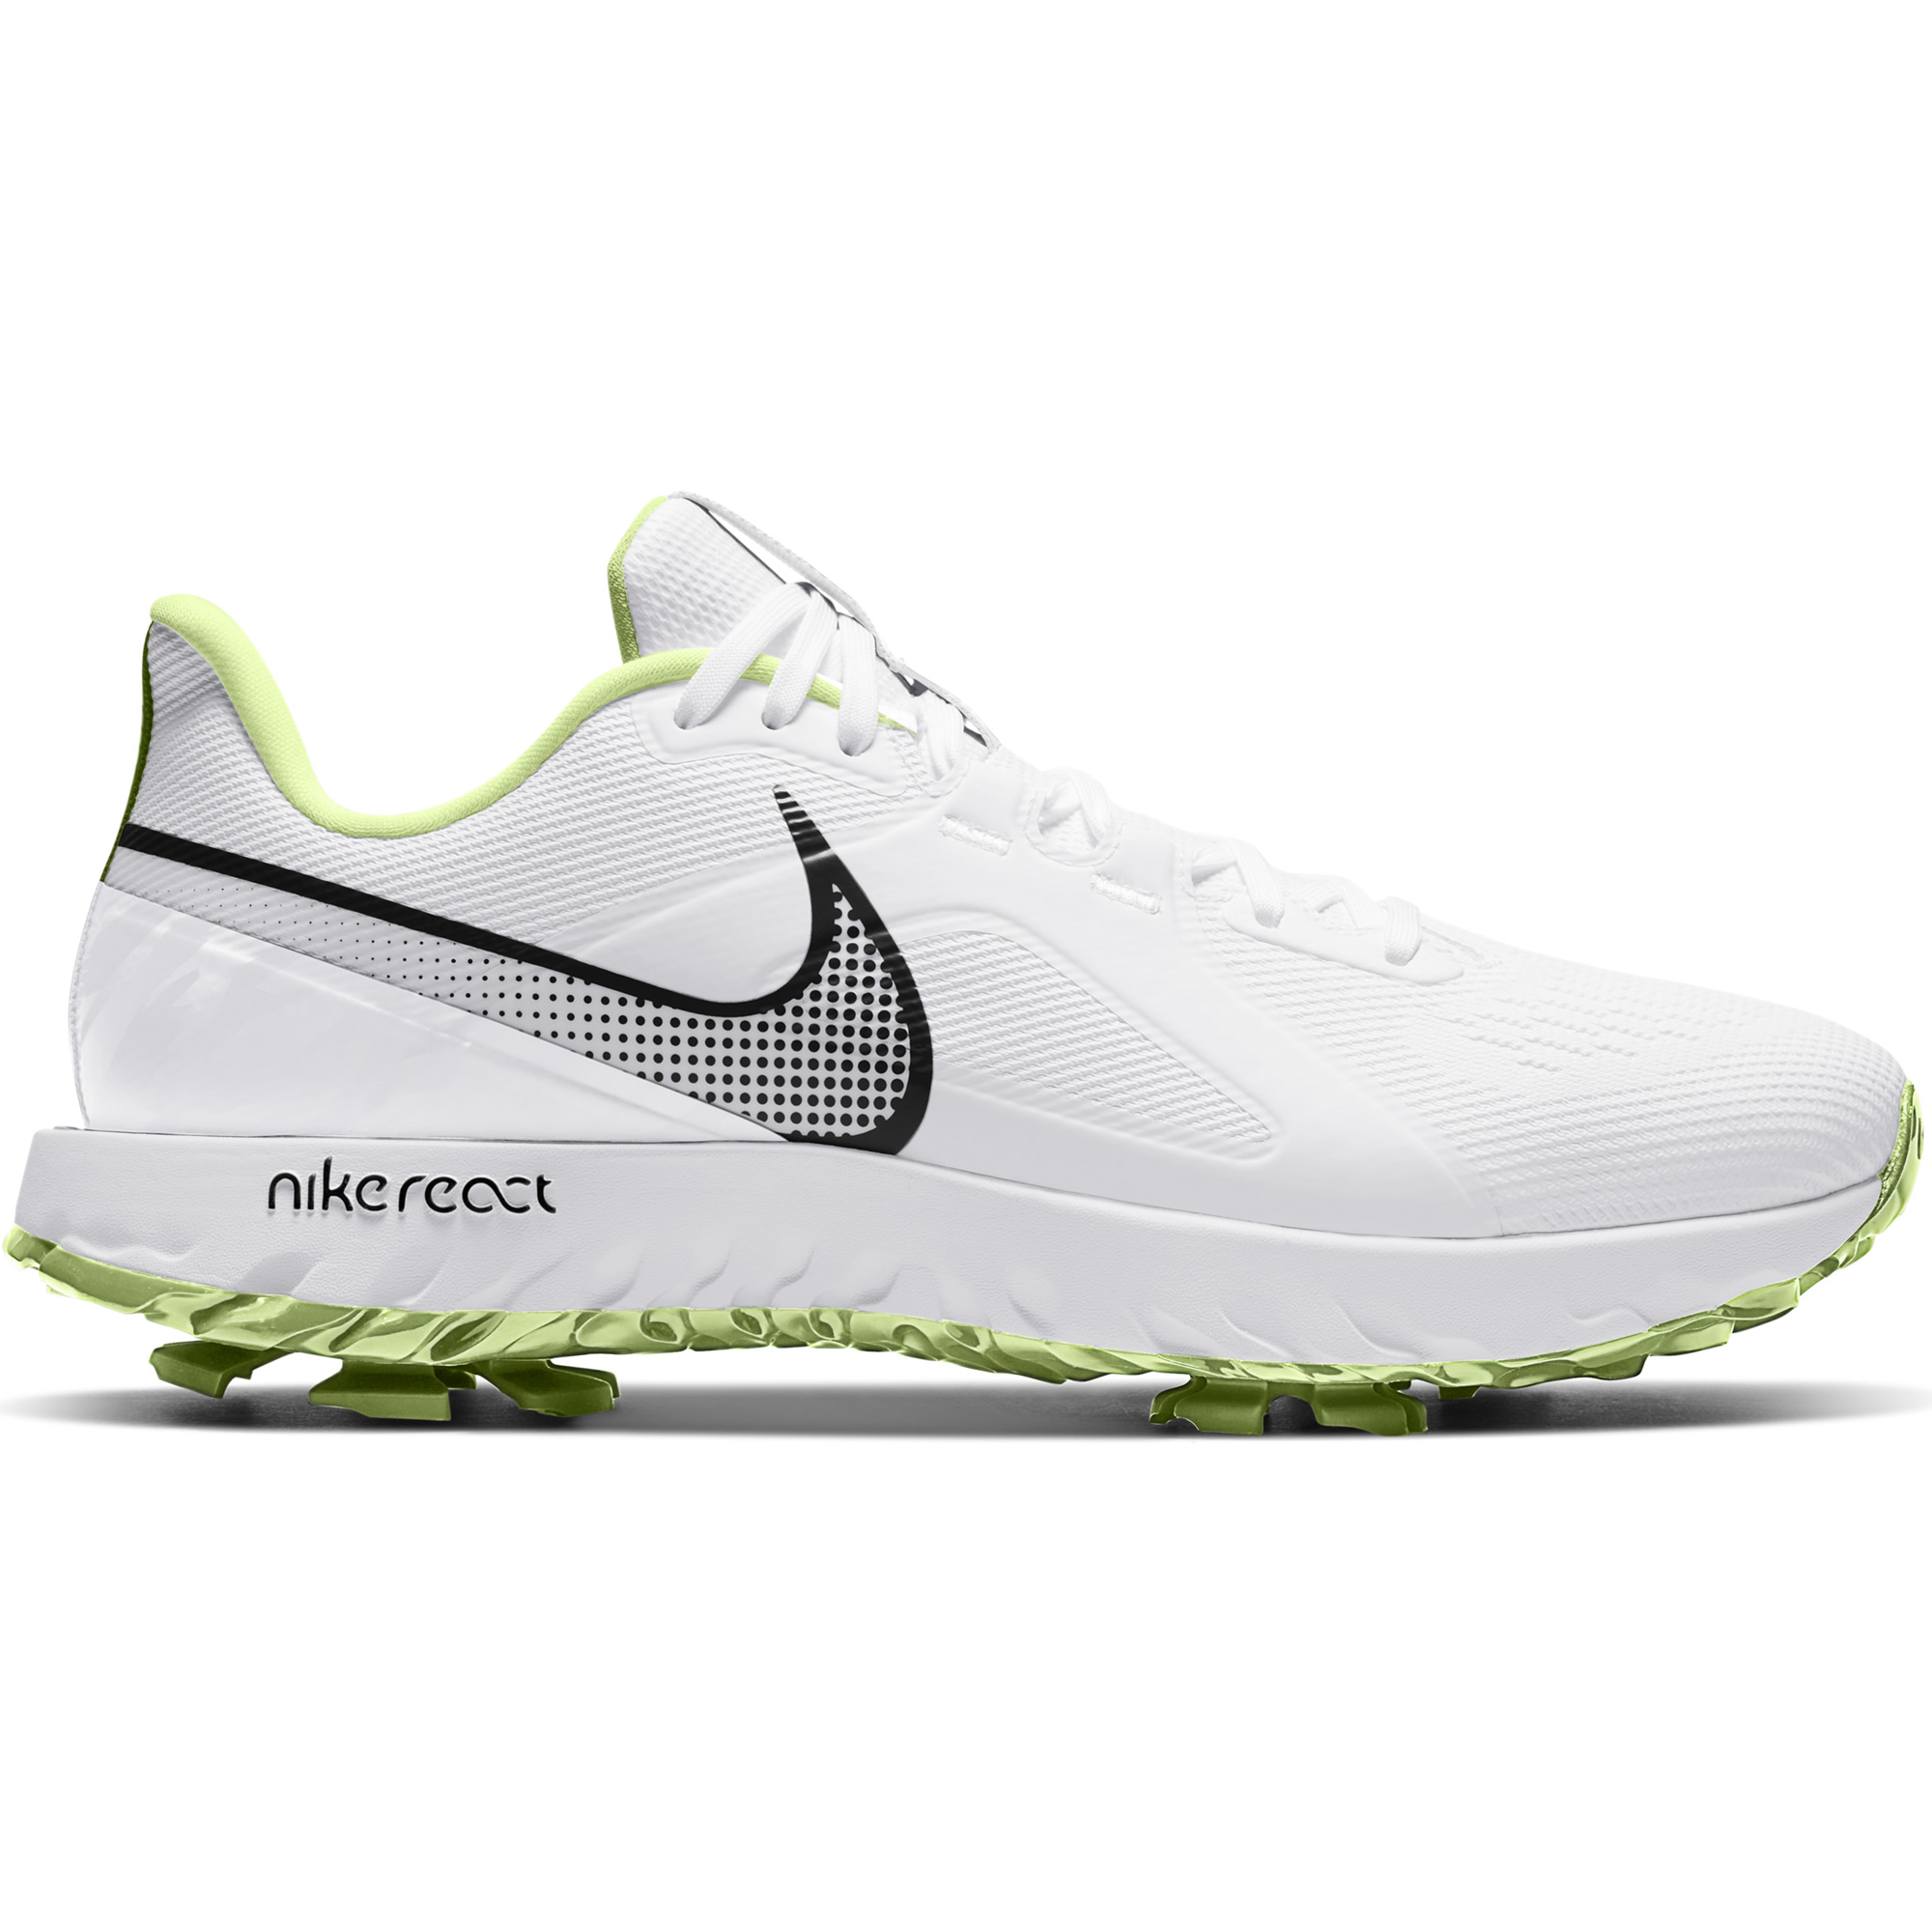 Nike React Infinity Pro Golf Shoes White/Barely Volt/Black Scottsdale